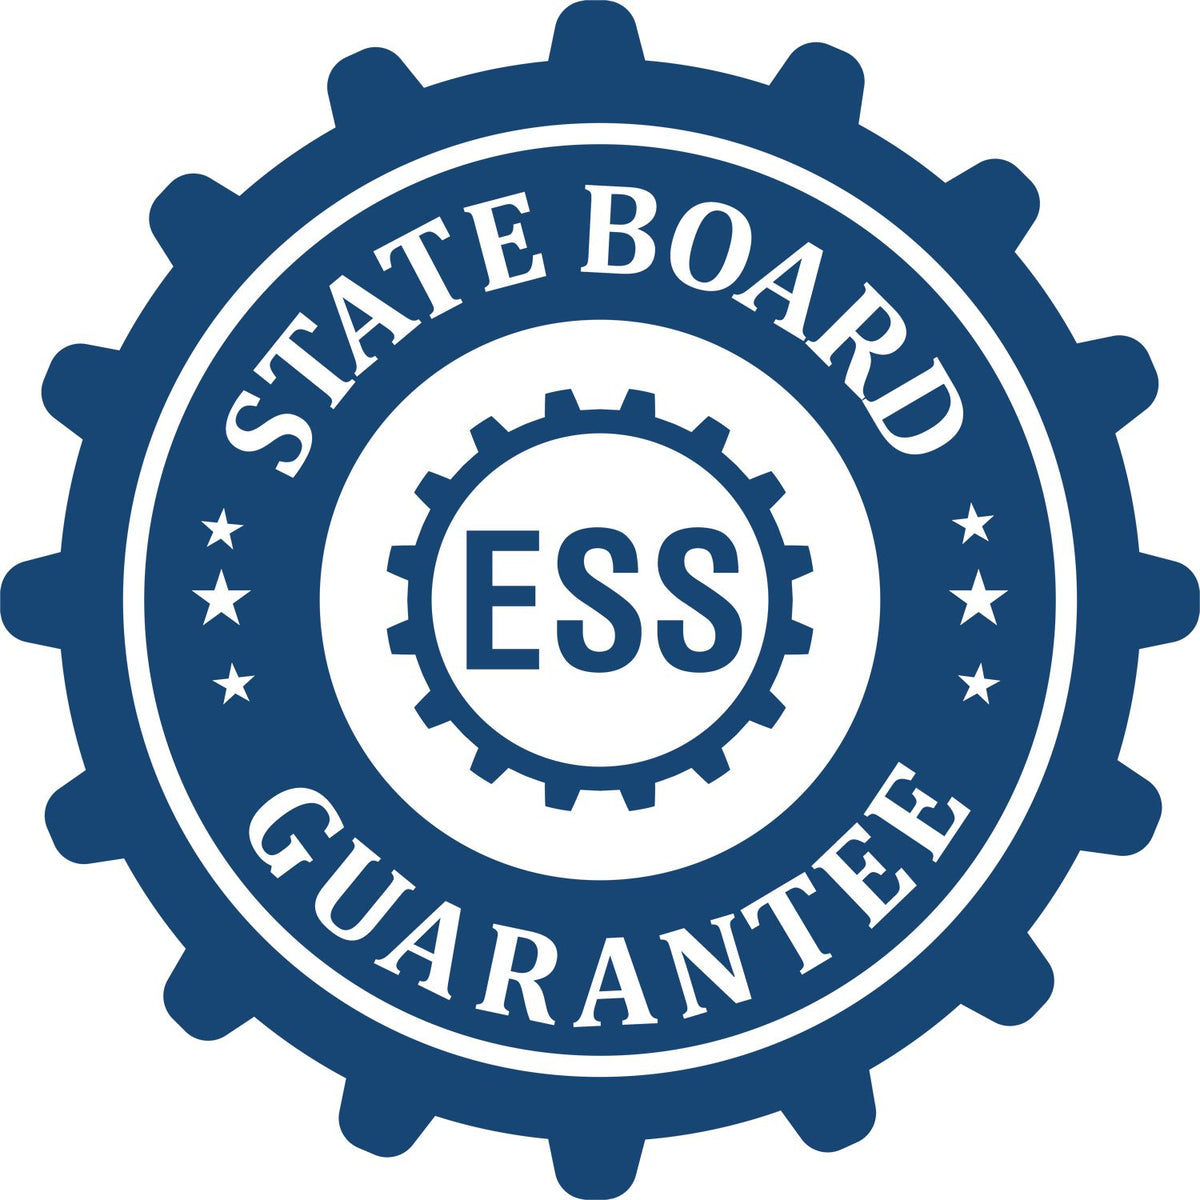 An emblem in a gear shape illustrating a state board guarantee for the Hybrid North Dakota Land Surveyor Seal